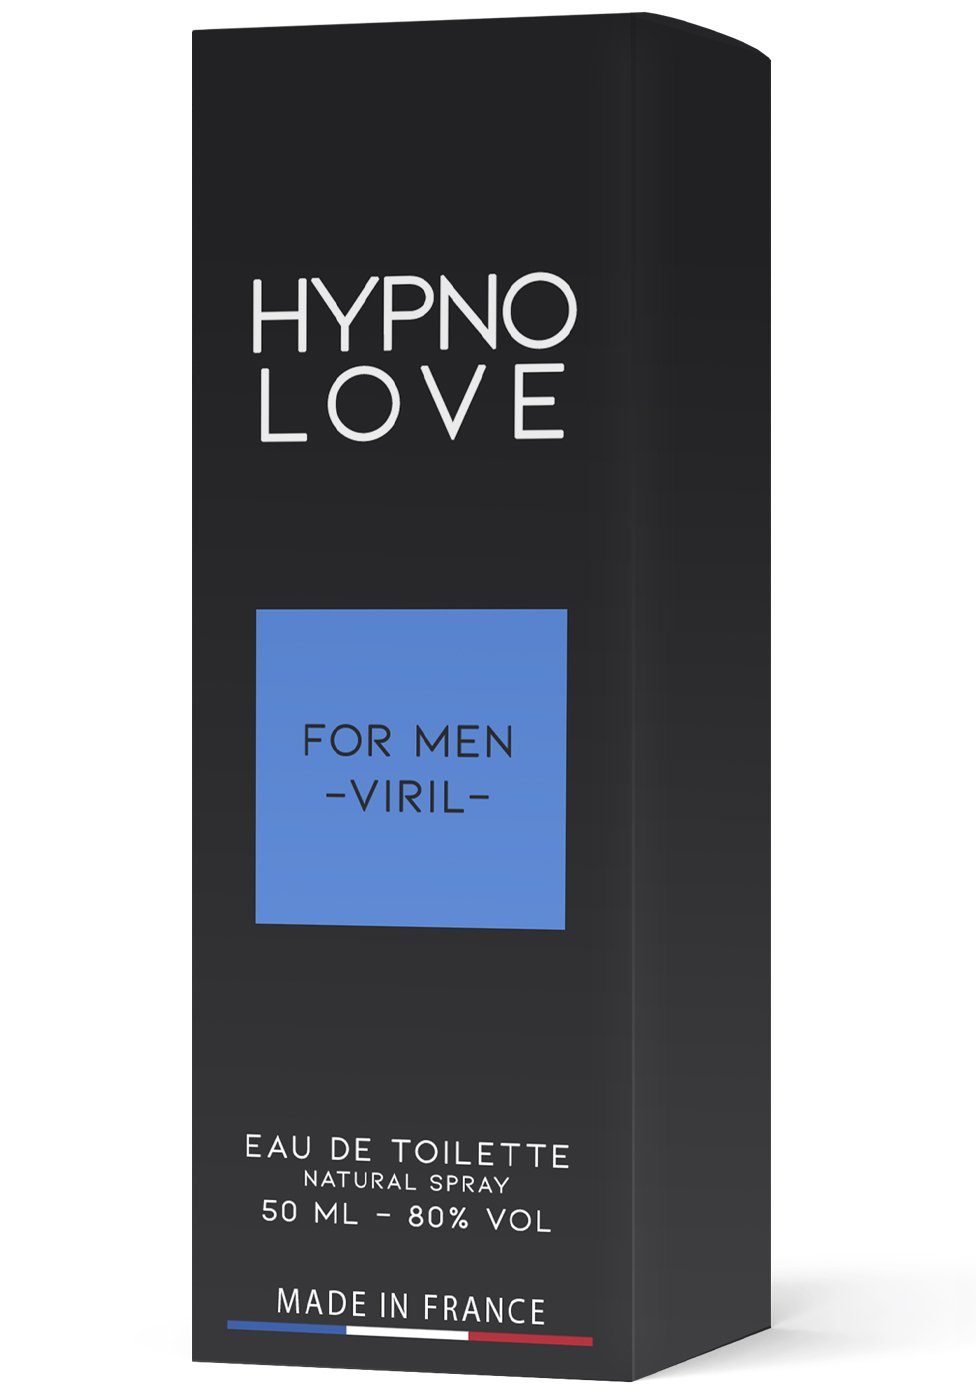 Parfum de Hypno-Love Eau Ruf for Parfum Men